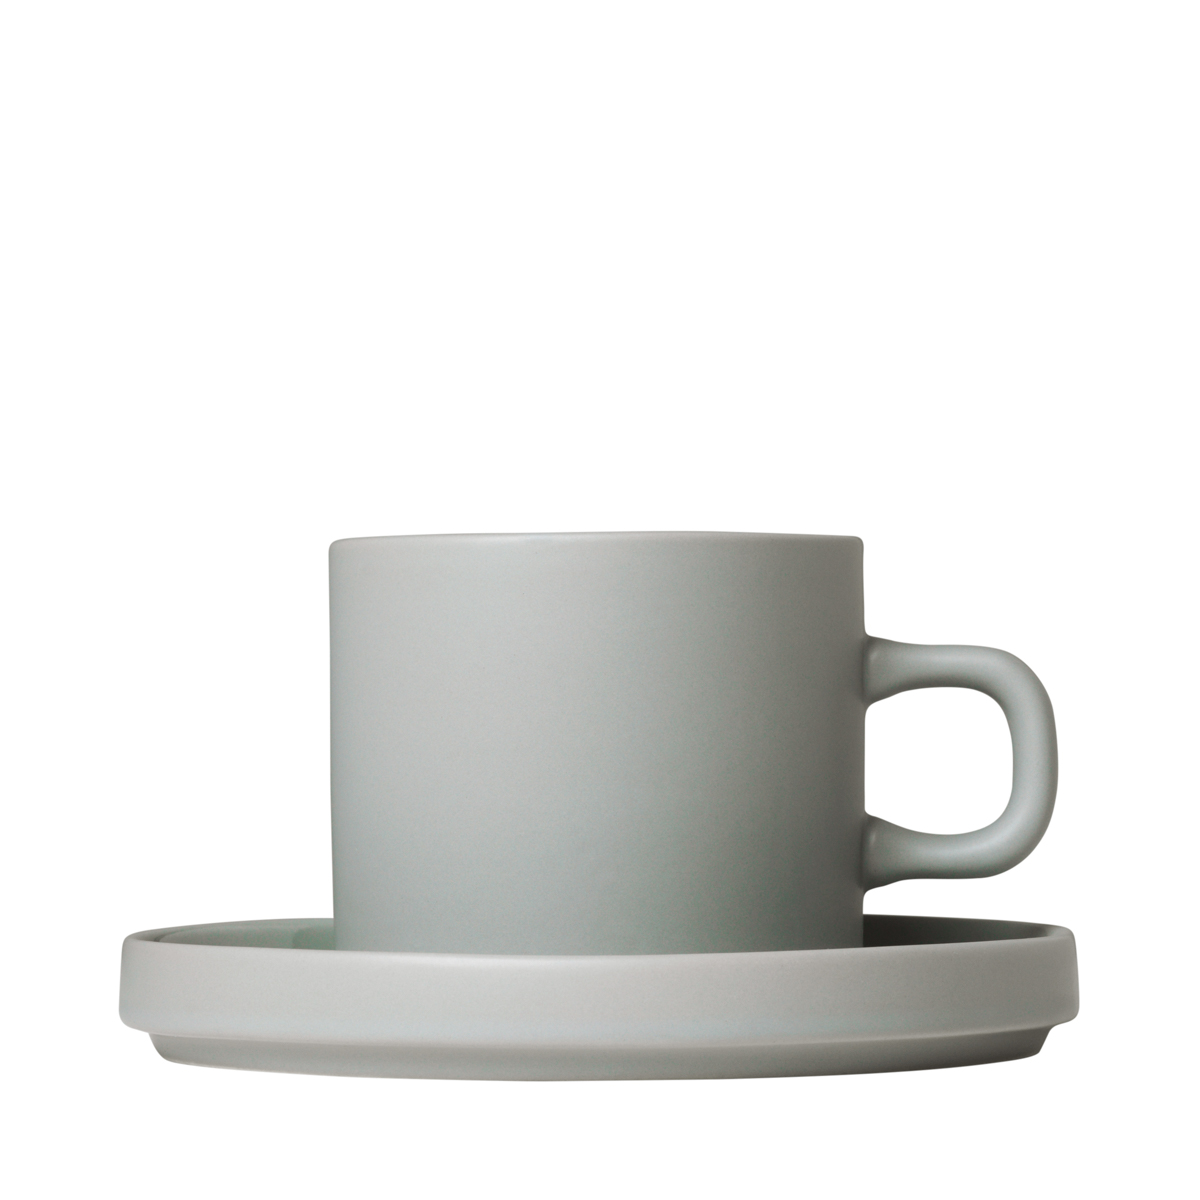 Set 2 Kaffeetassen -PILAR- Mirage Gray, 200 ml, Ø 8 cm, Ø 14,5 cm. Material: Keramik. Von Blomus.